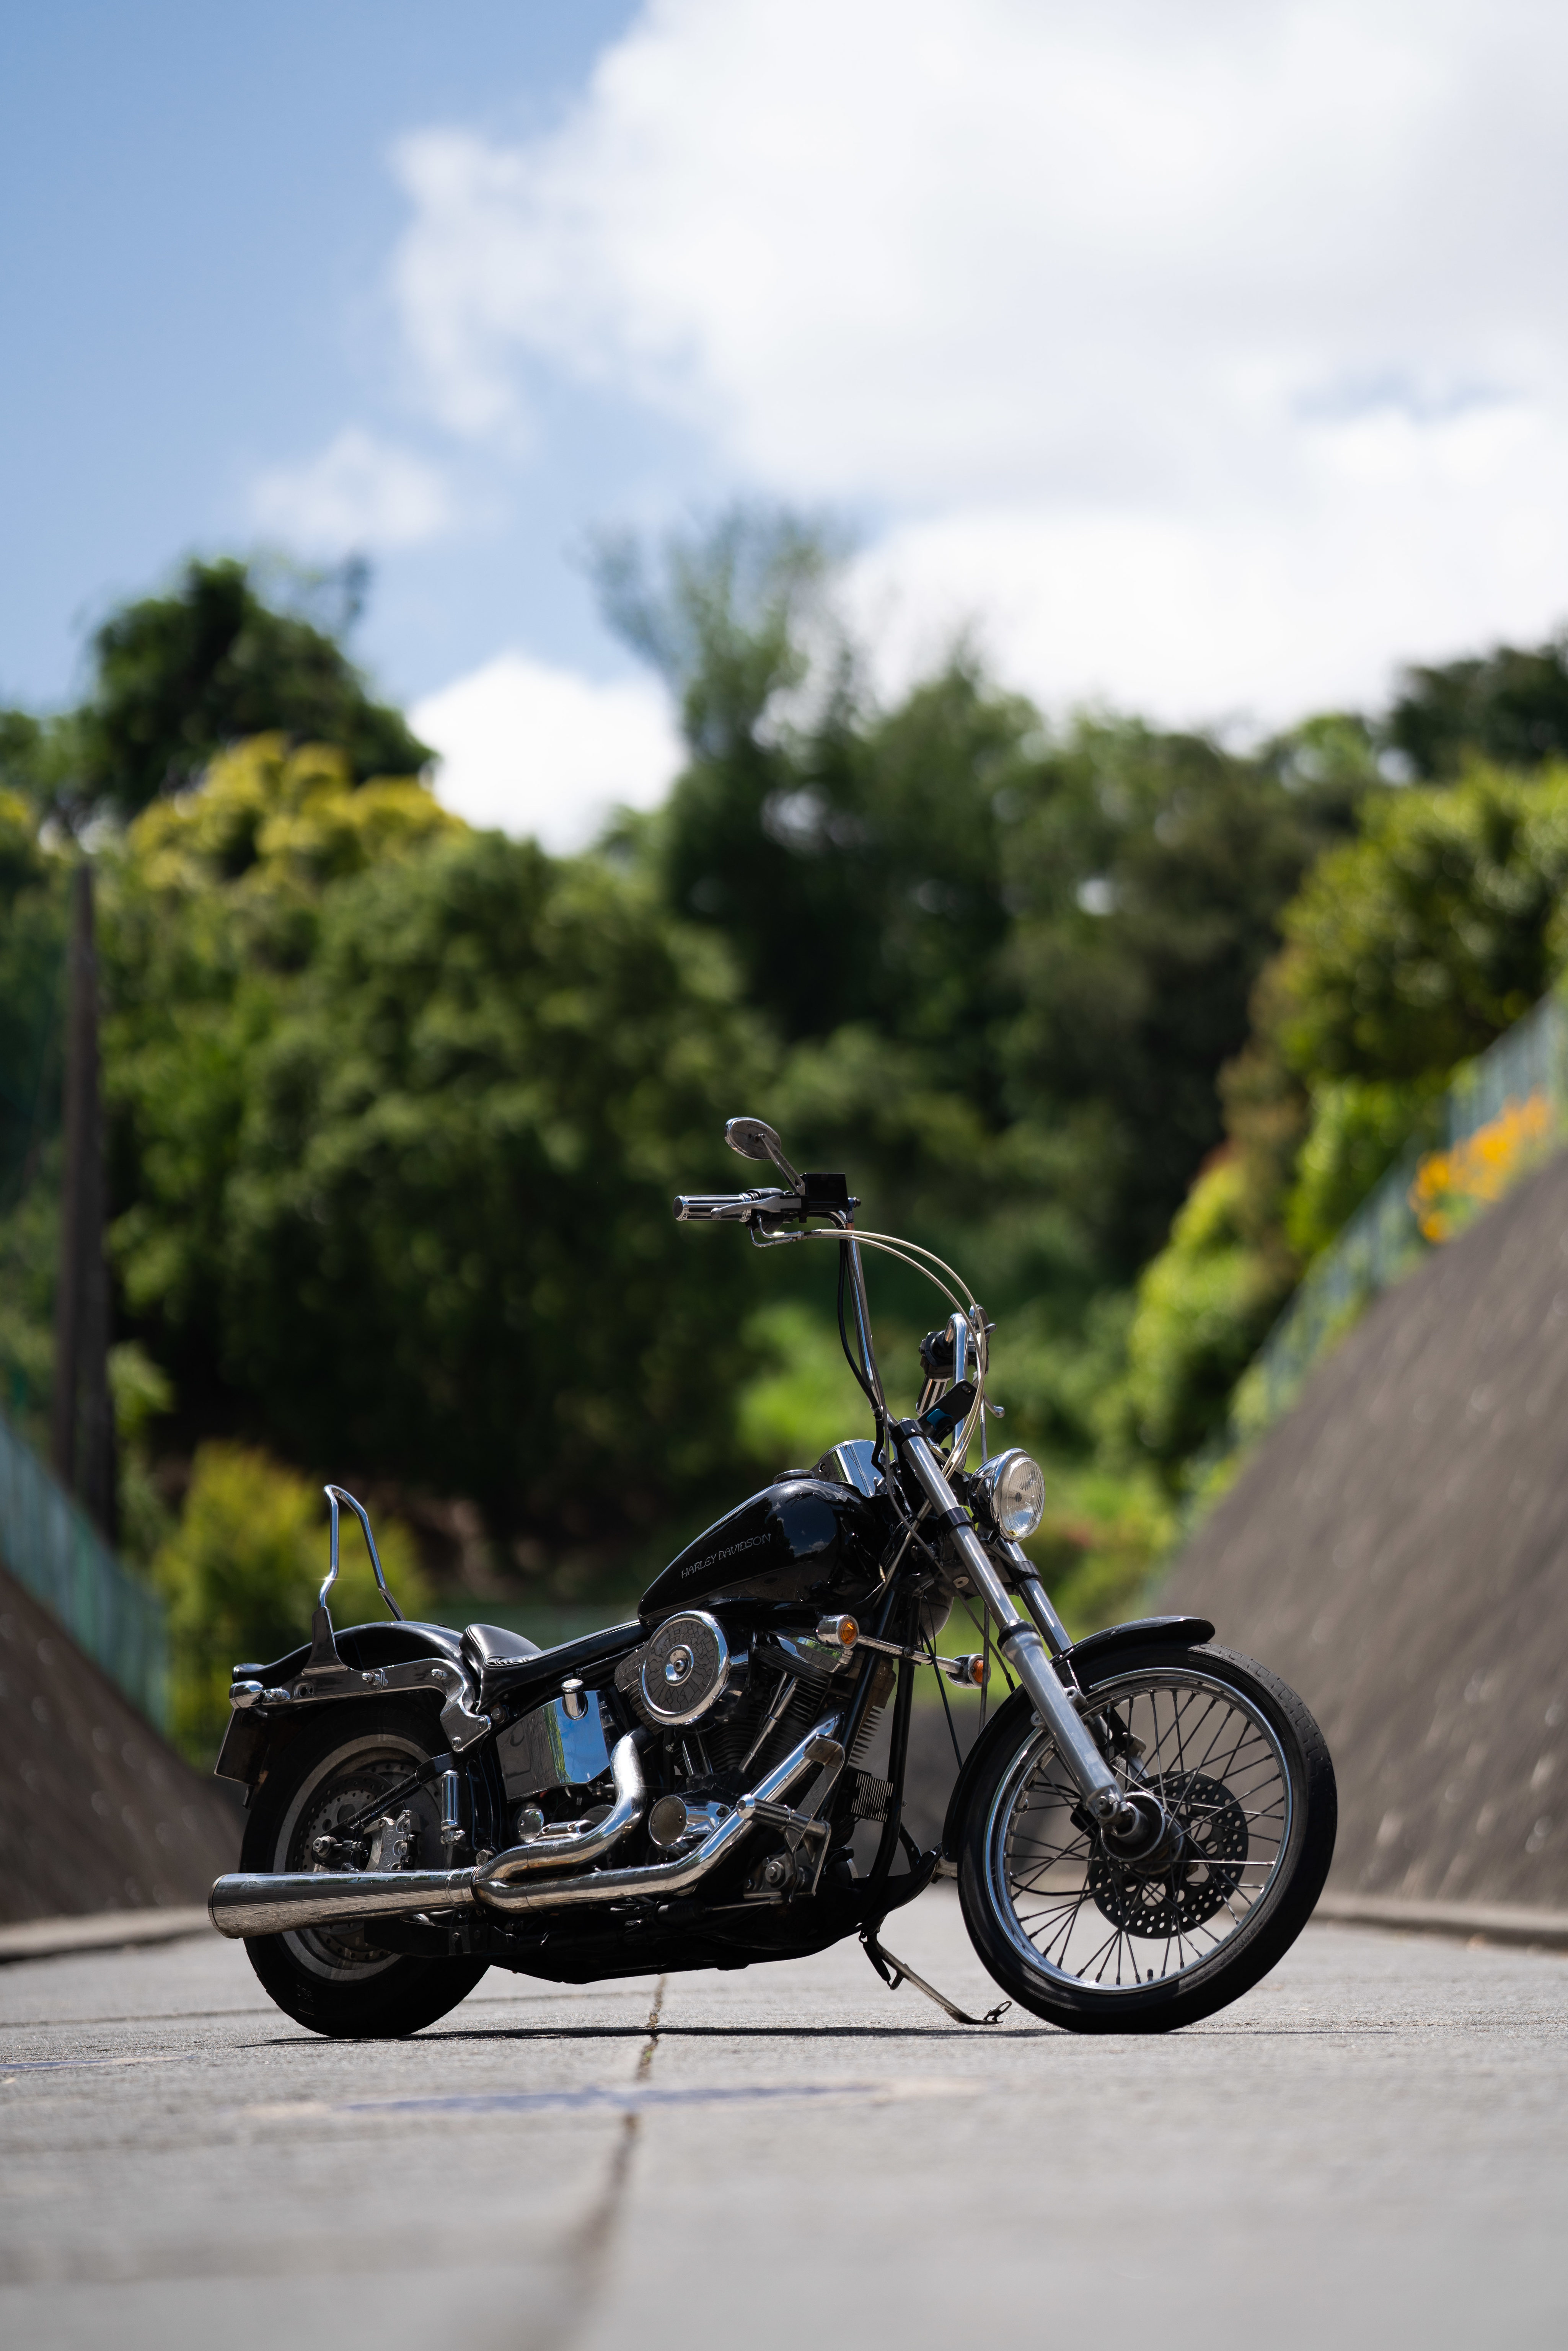 harley davidson, bike, motorcycles, side view, motorcycle Full HD